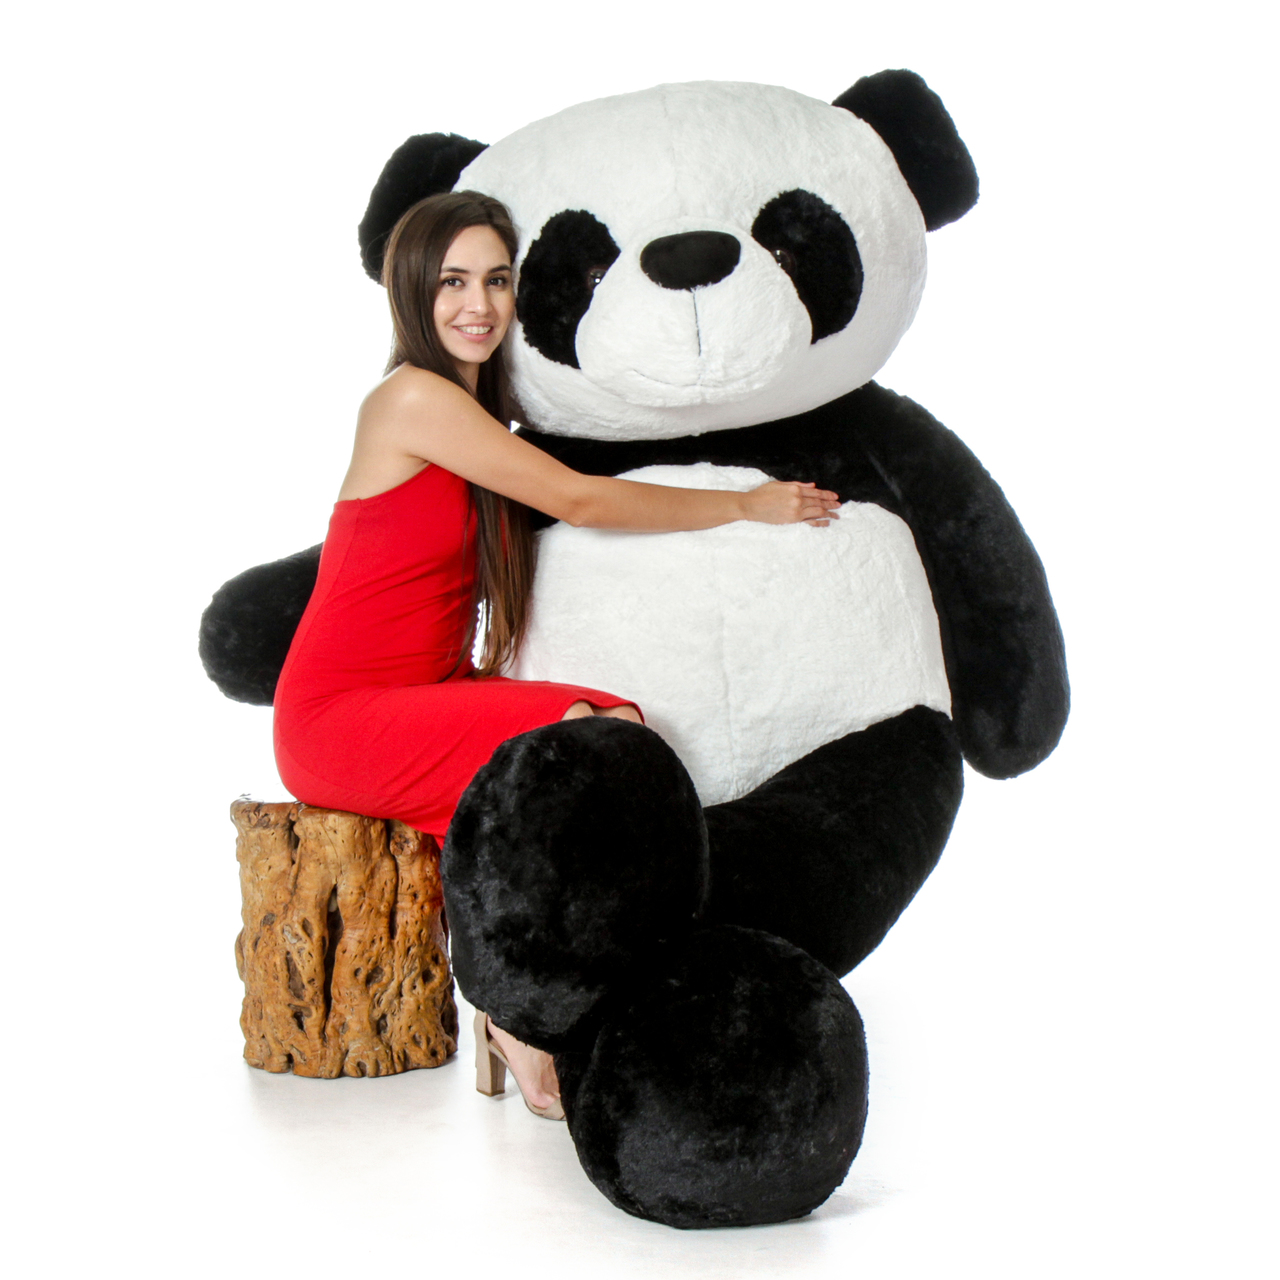 giant stuffed panda bear